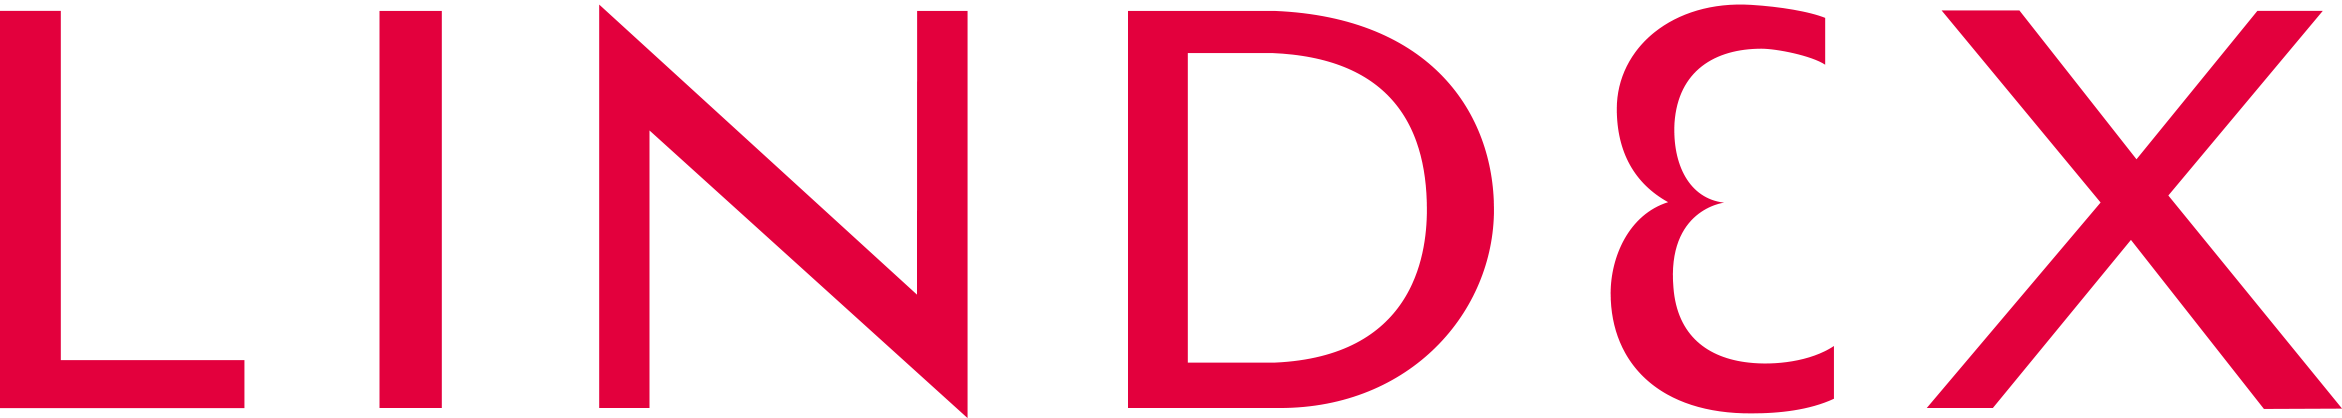 Lindex-logo